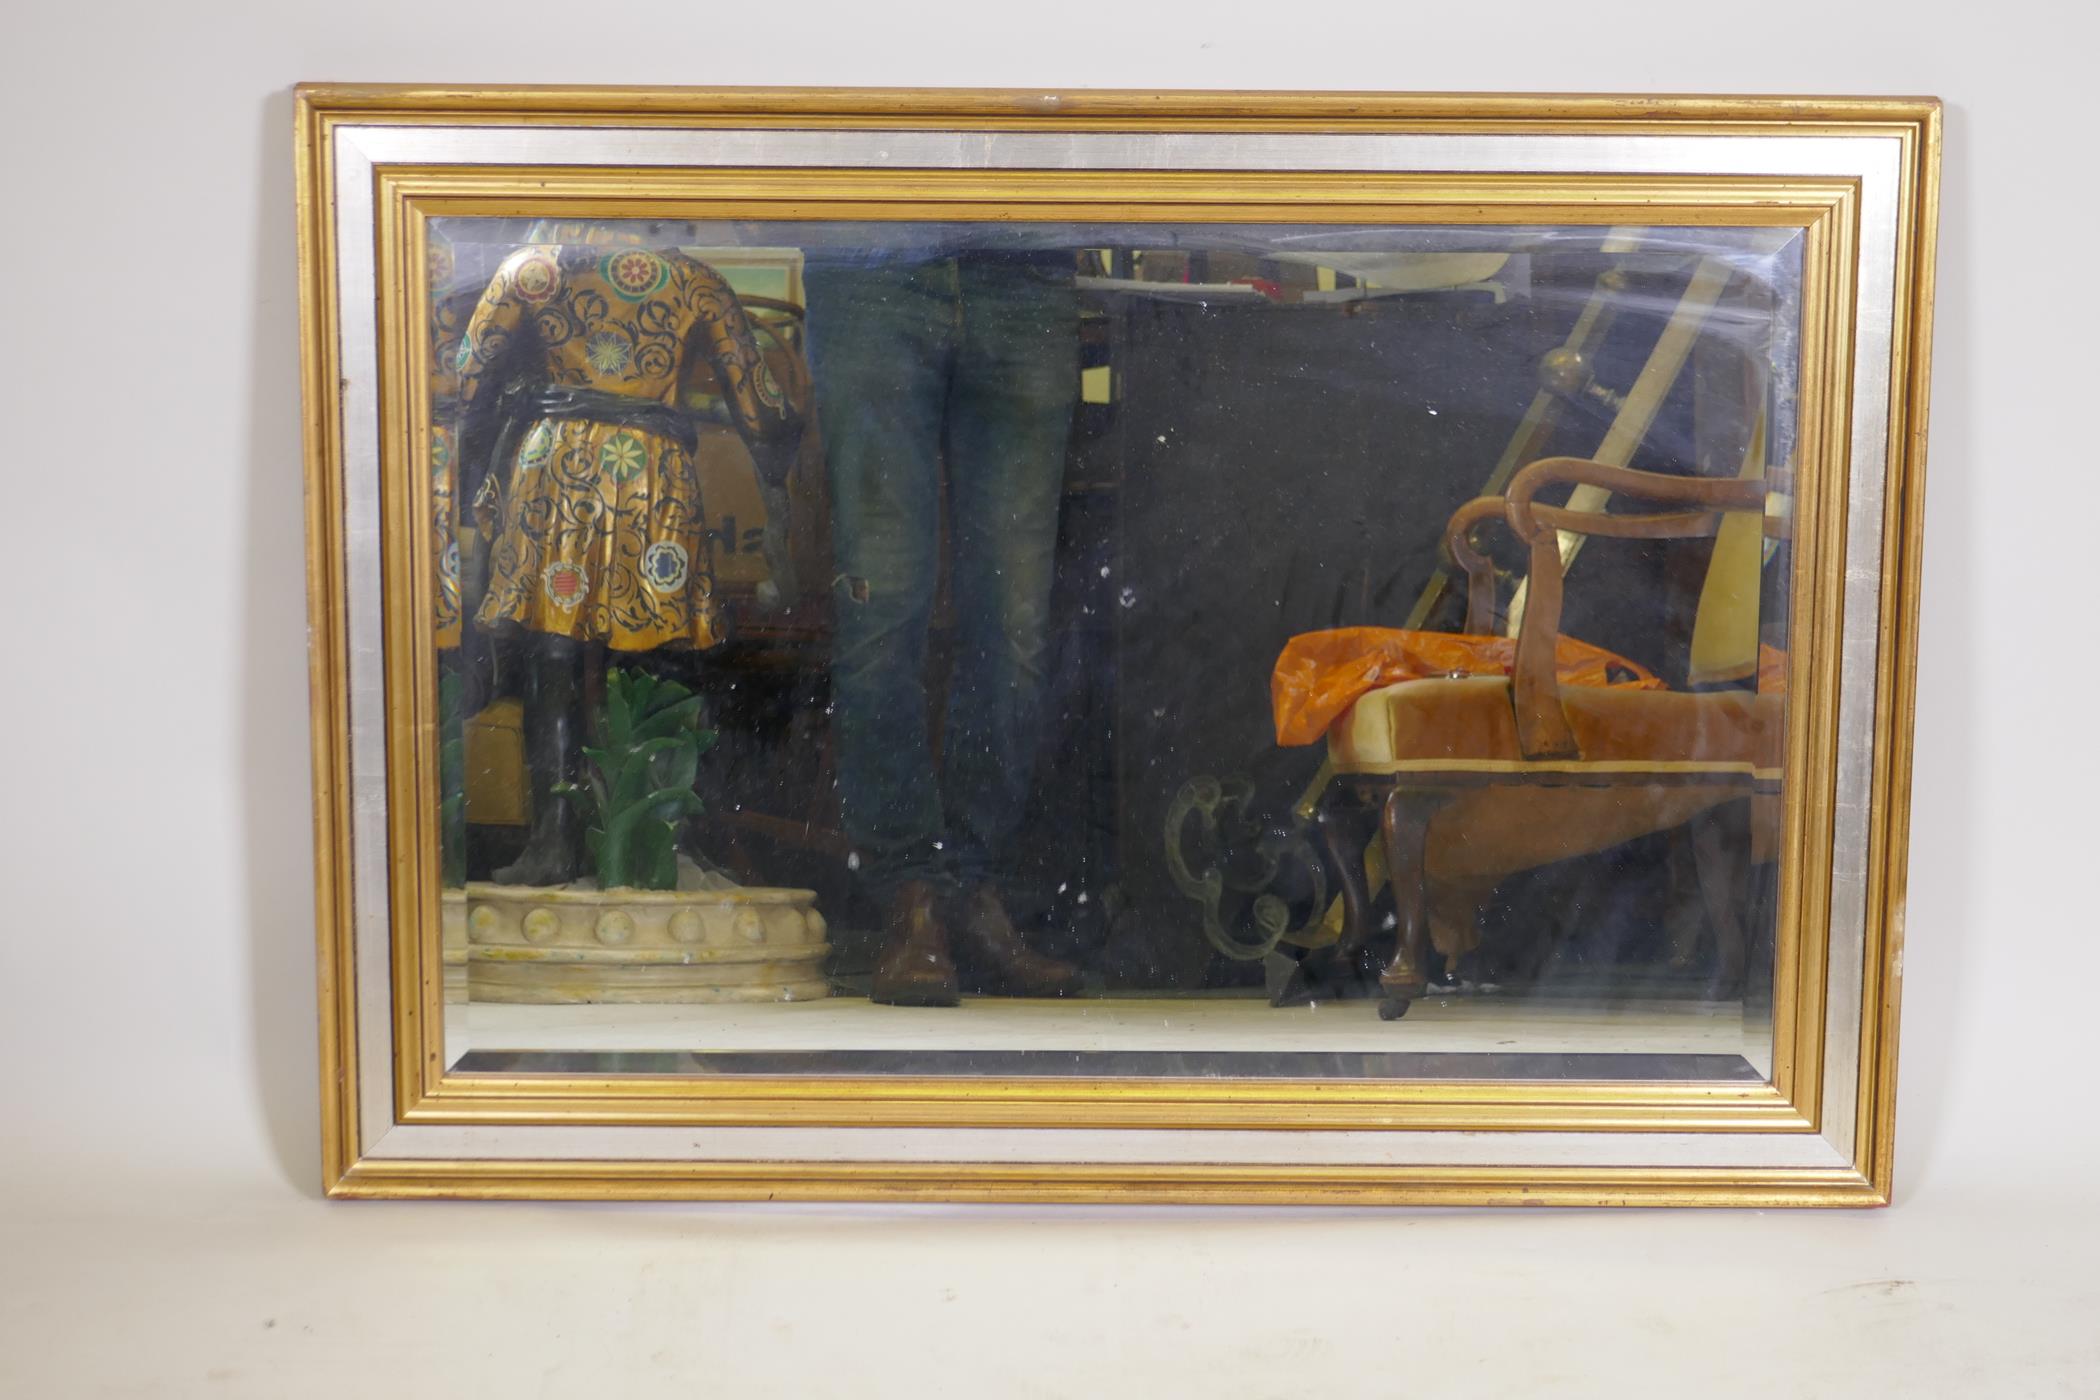 A gilt framed wall mirror, 40" x 28"